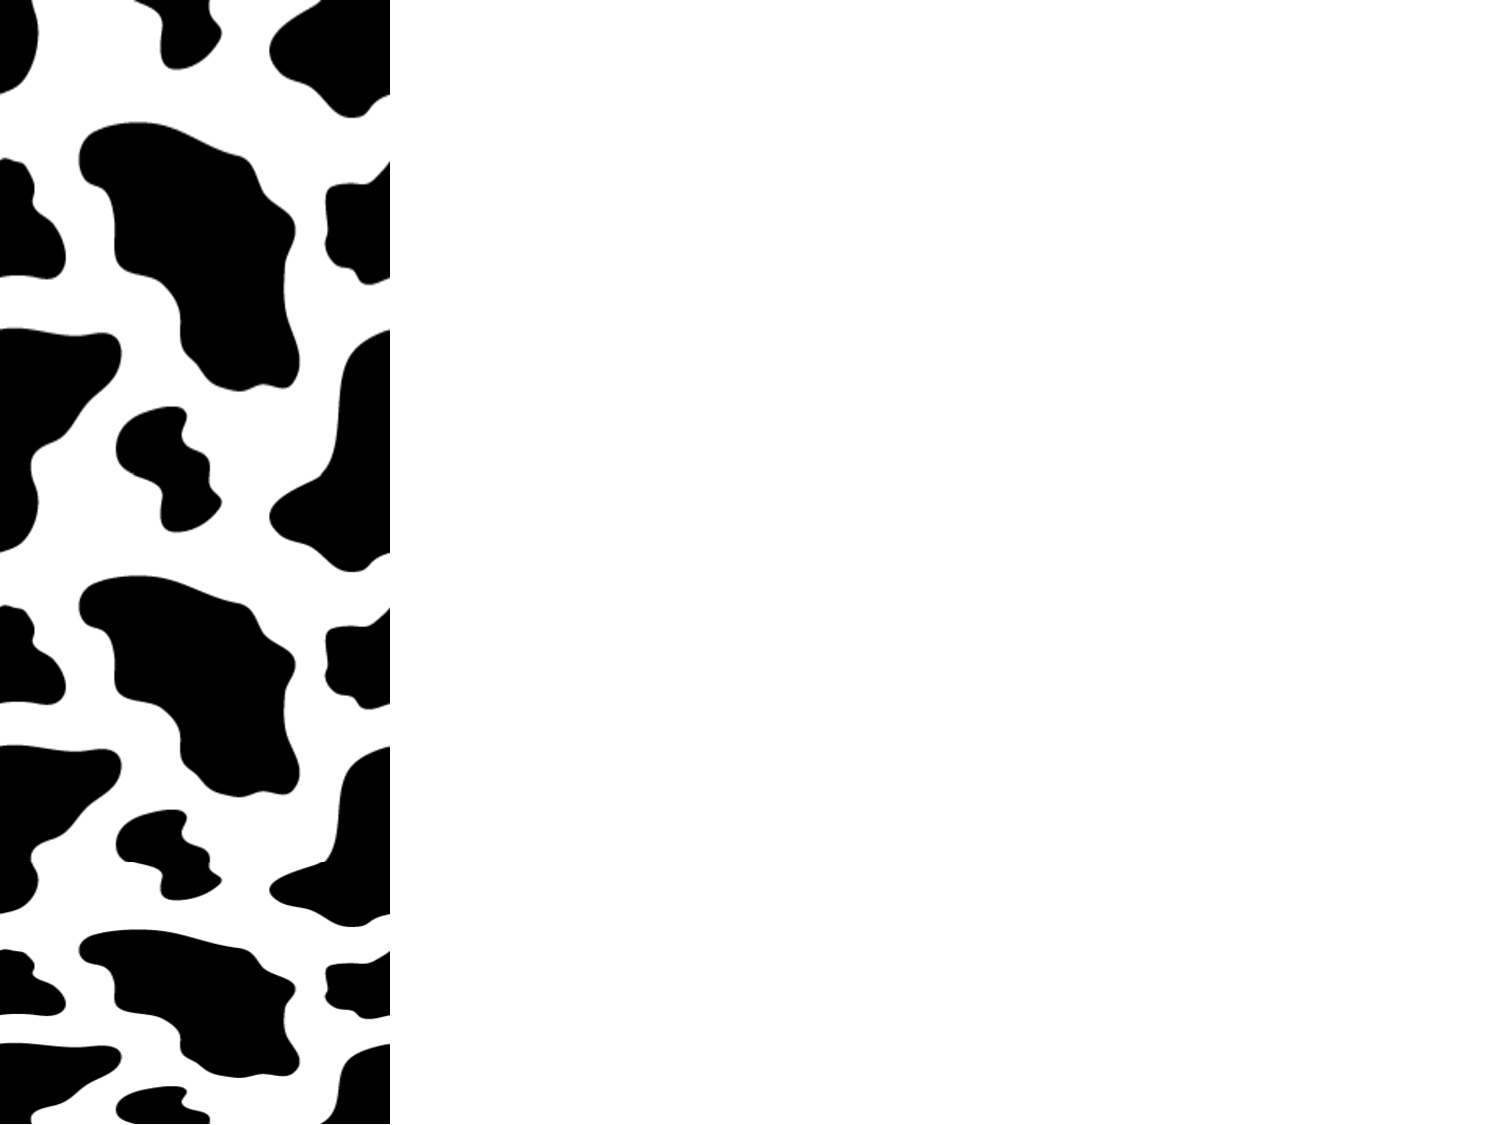 cow print wallpaper border